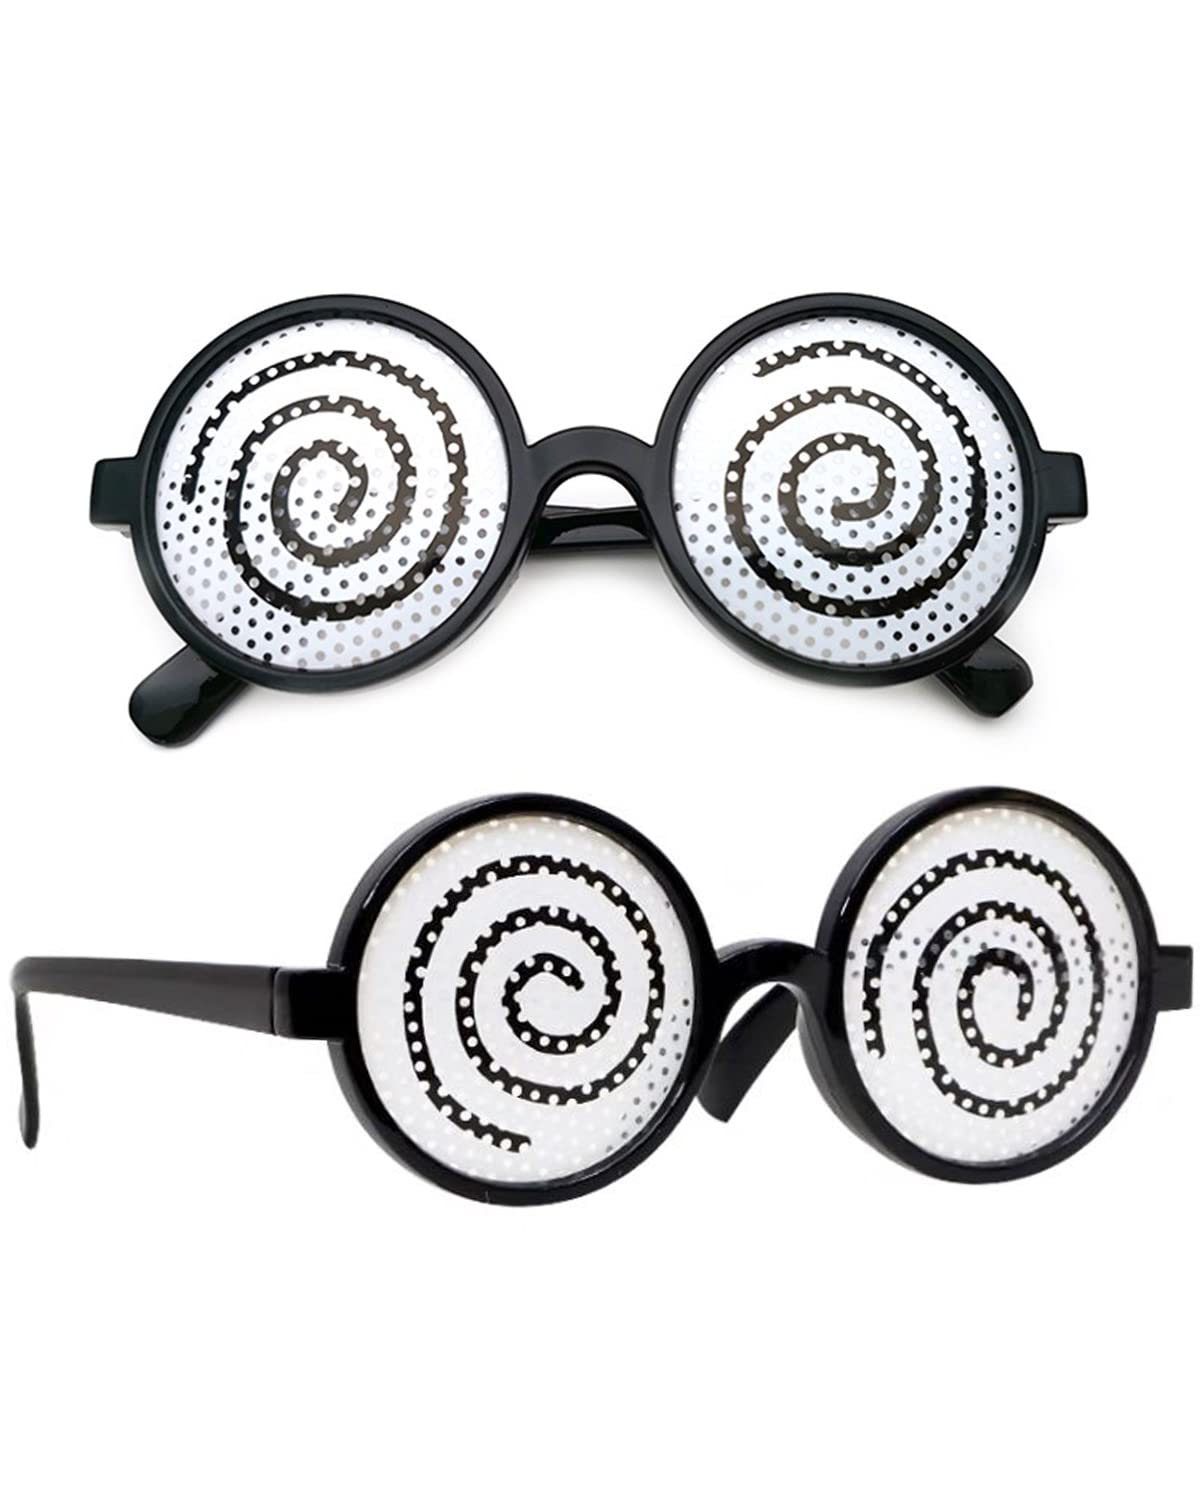 YFFSFDC おもしろメガネ 眩暈眼鏡 仮装 面白 パーティ 目が動く眼鏡 クールなcosplay 眼鏡 お笑い芸人 ファッション 小物【2個セット】